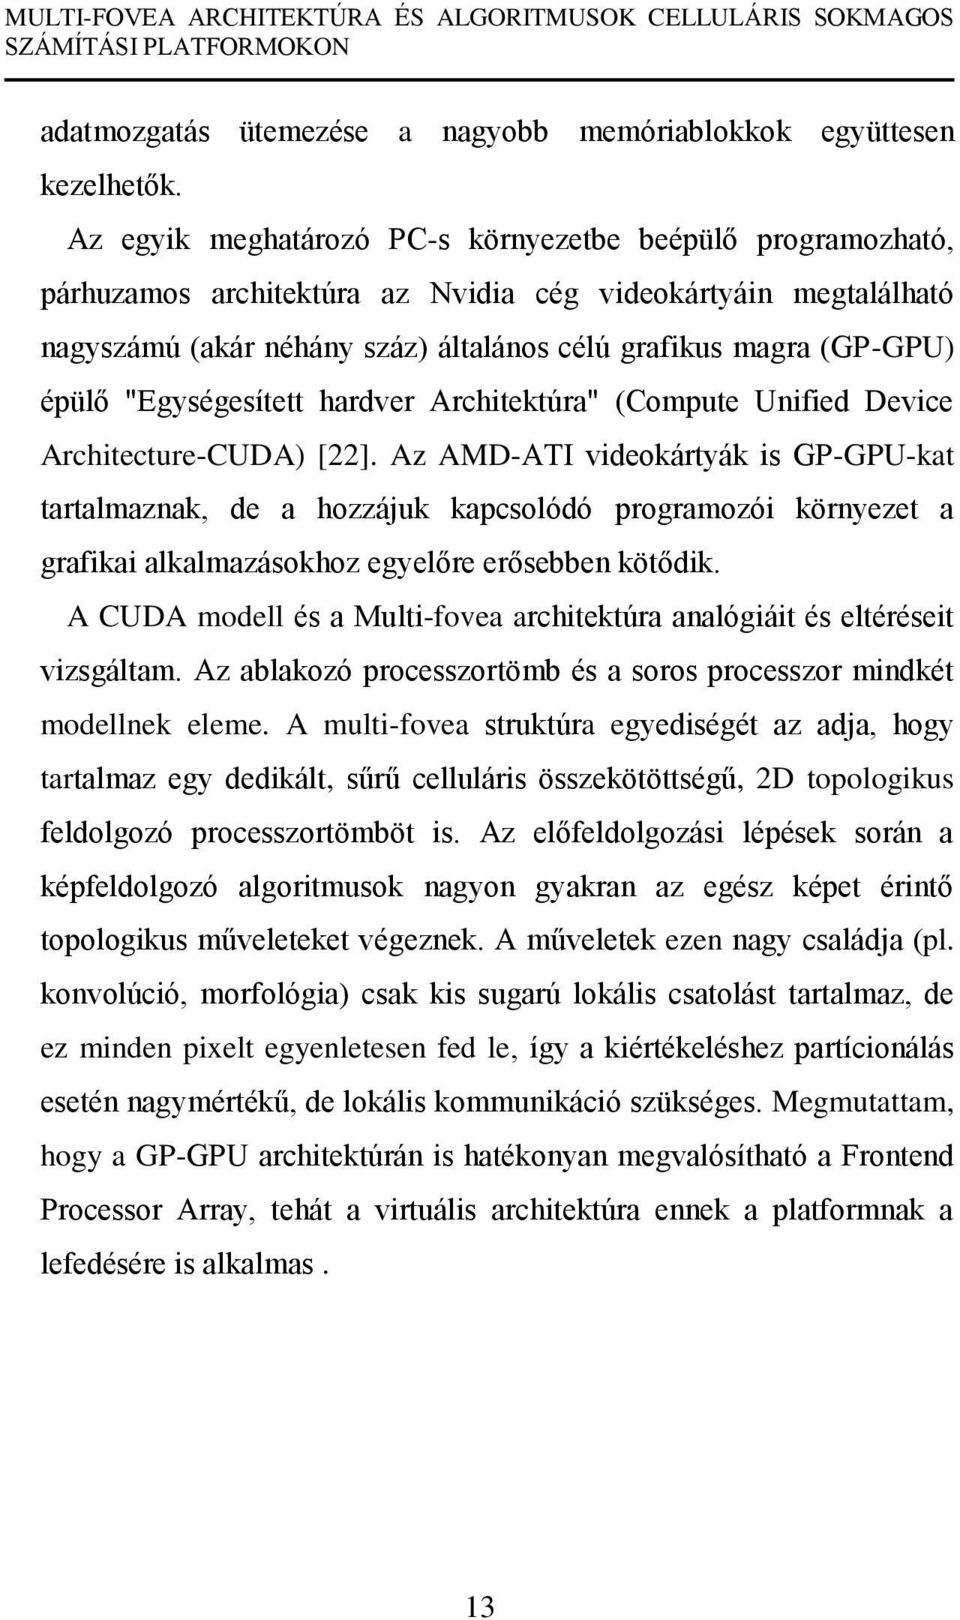 "Egységesített hardver Architektúra" (Compute Unified Device Architecture-CUDA) [22].